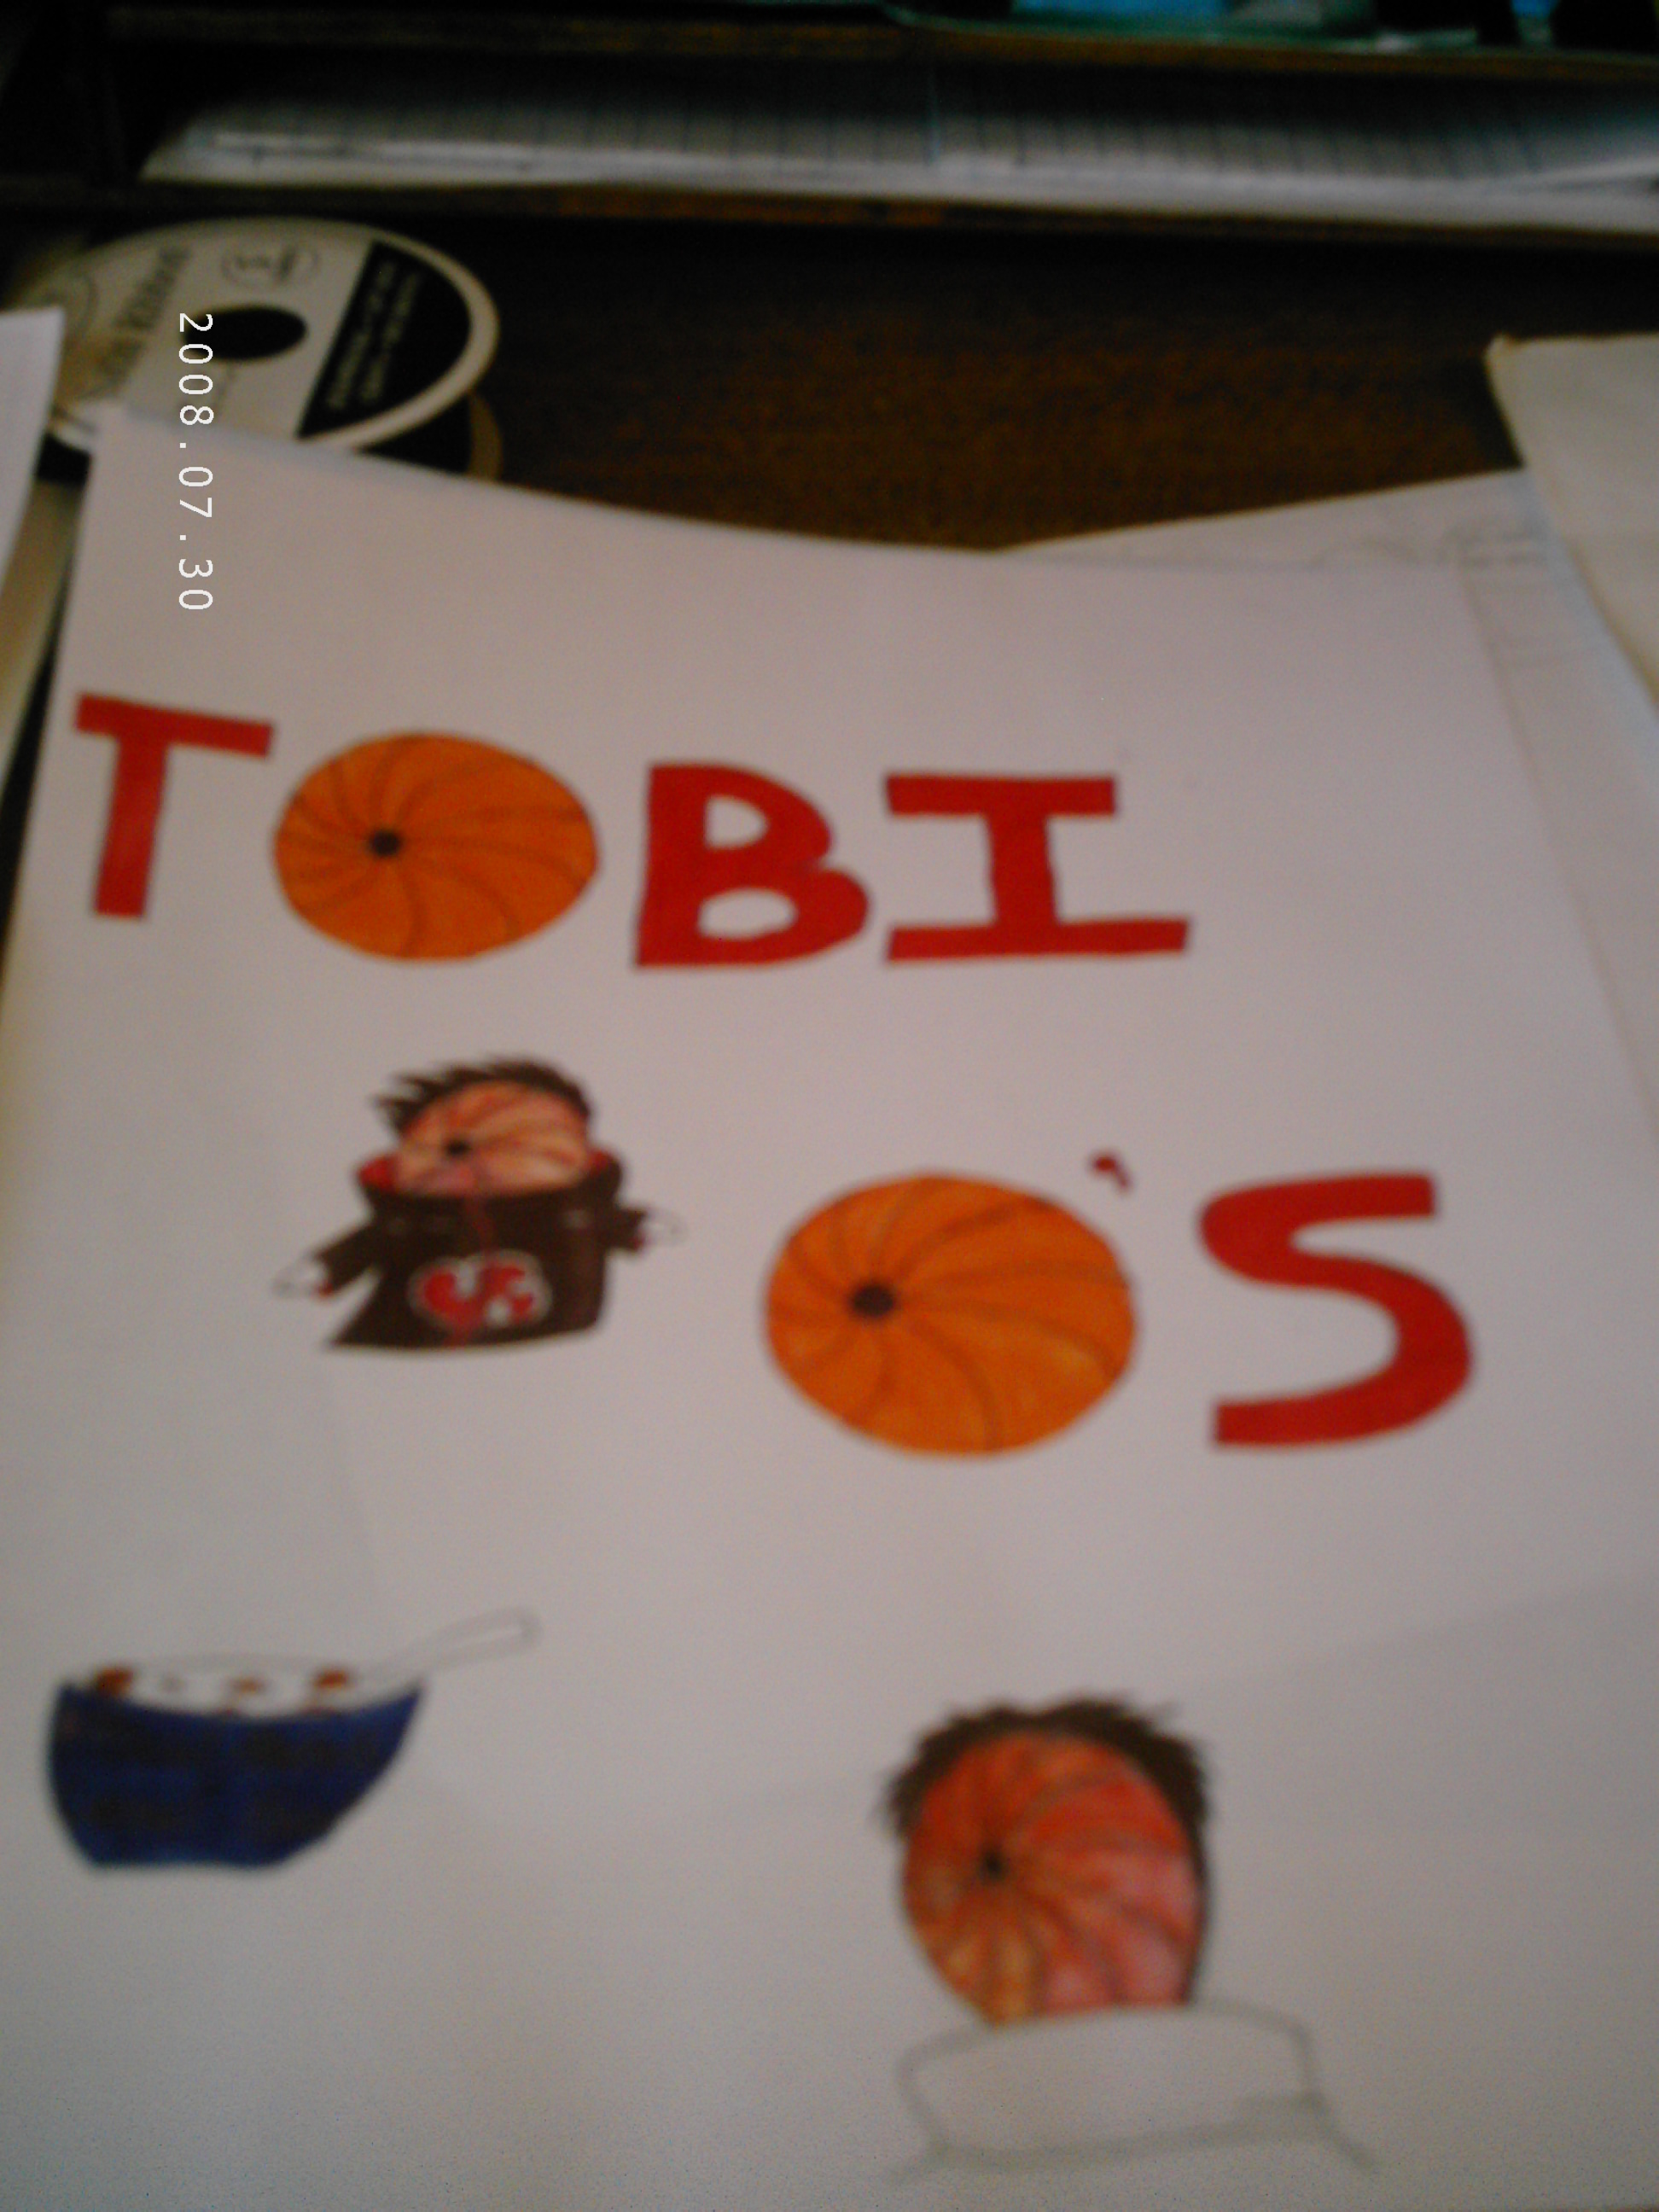 Tobi O's by TurotTrainer